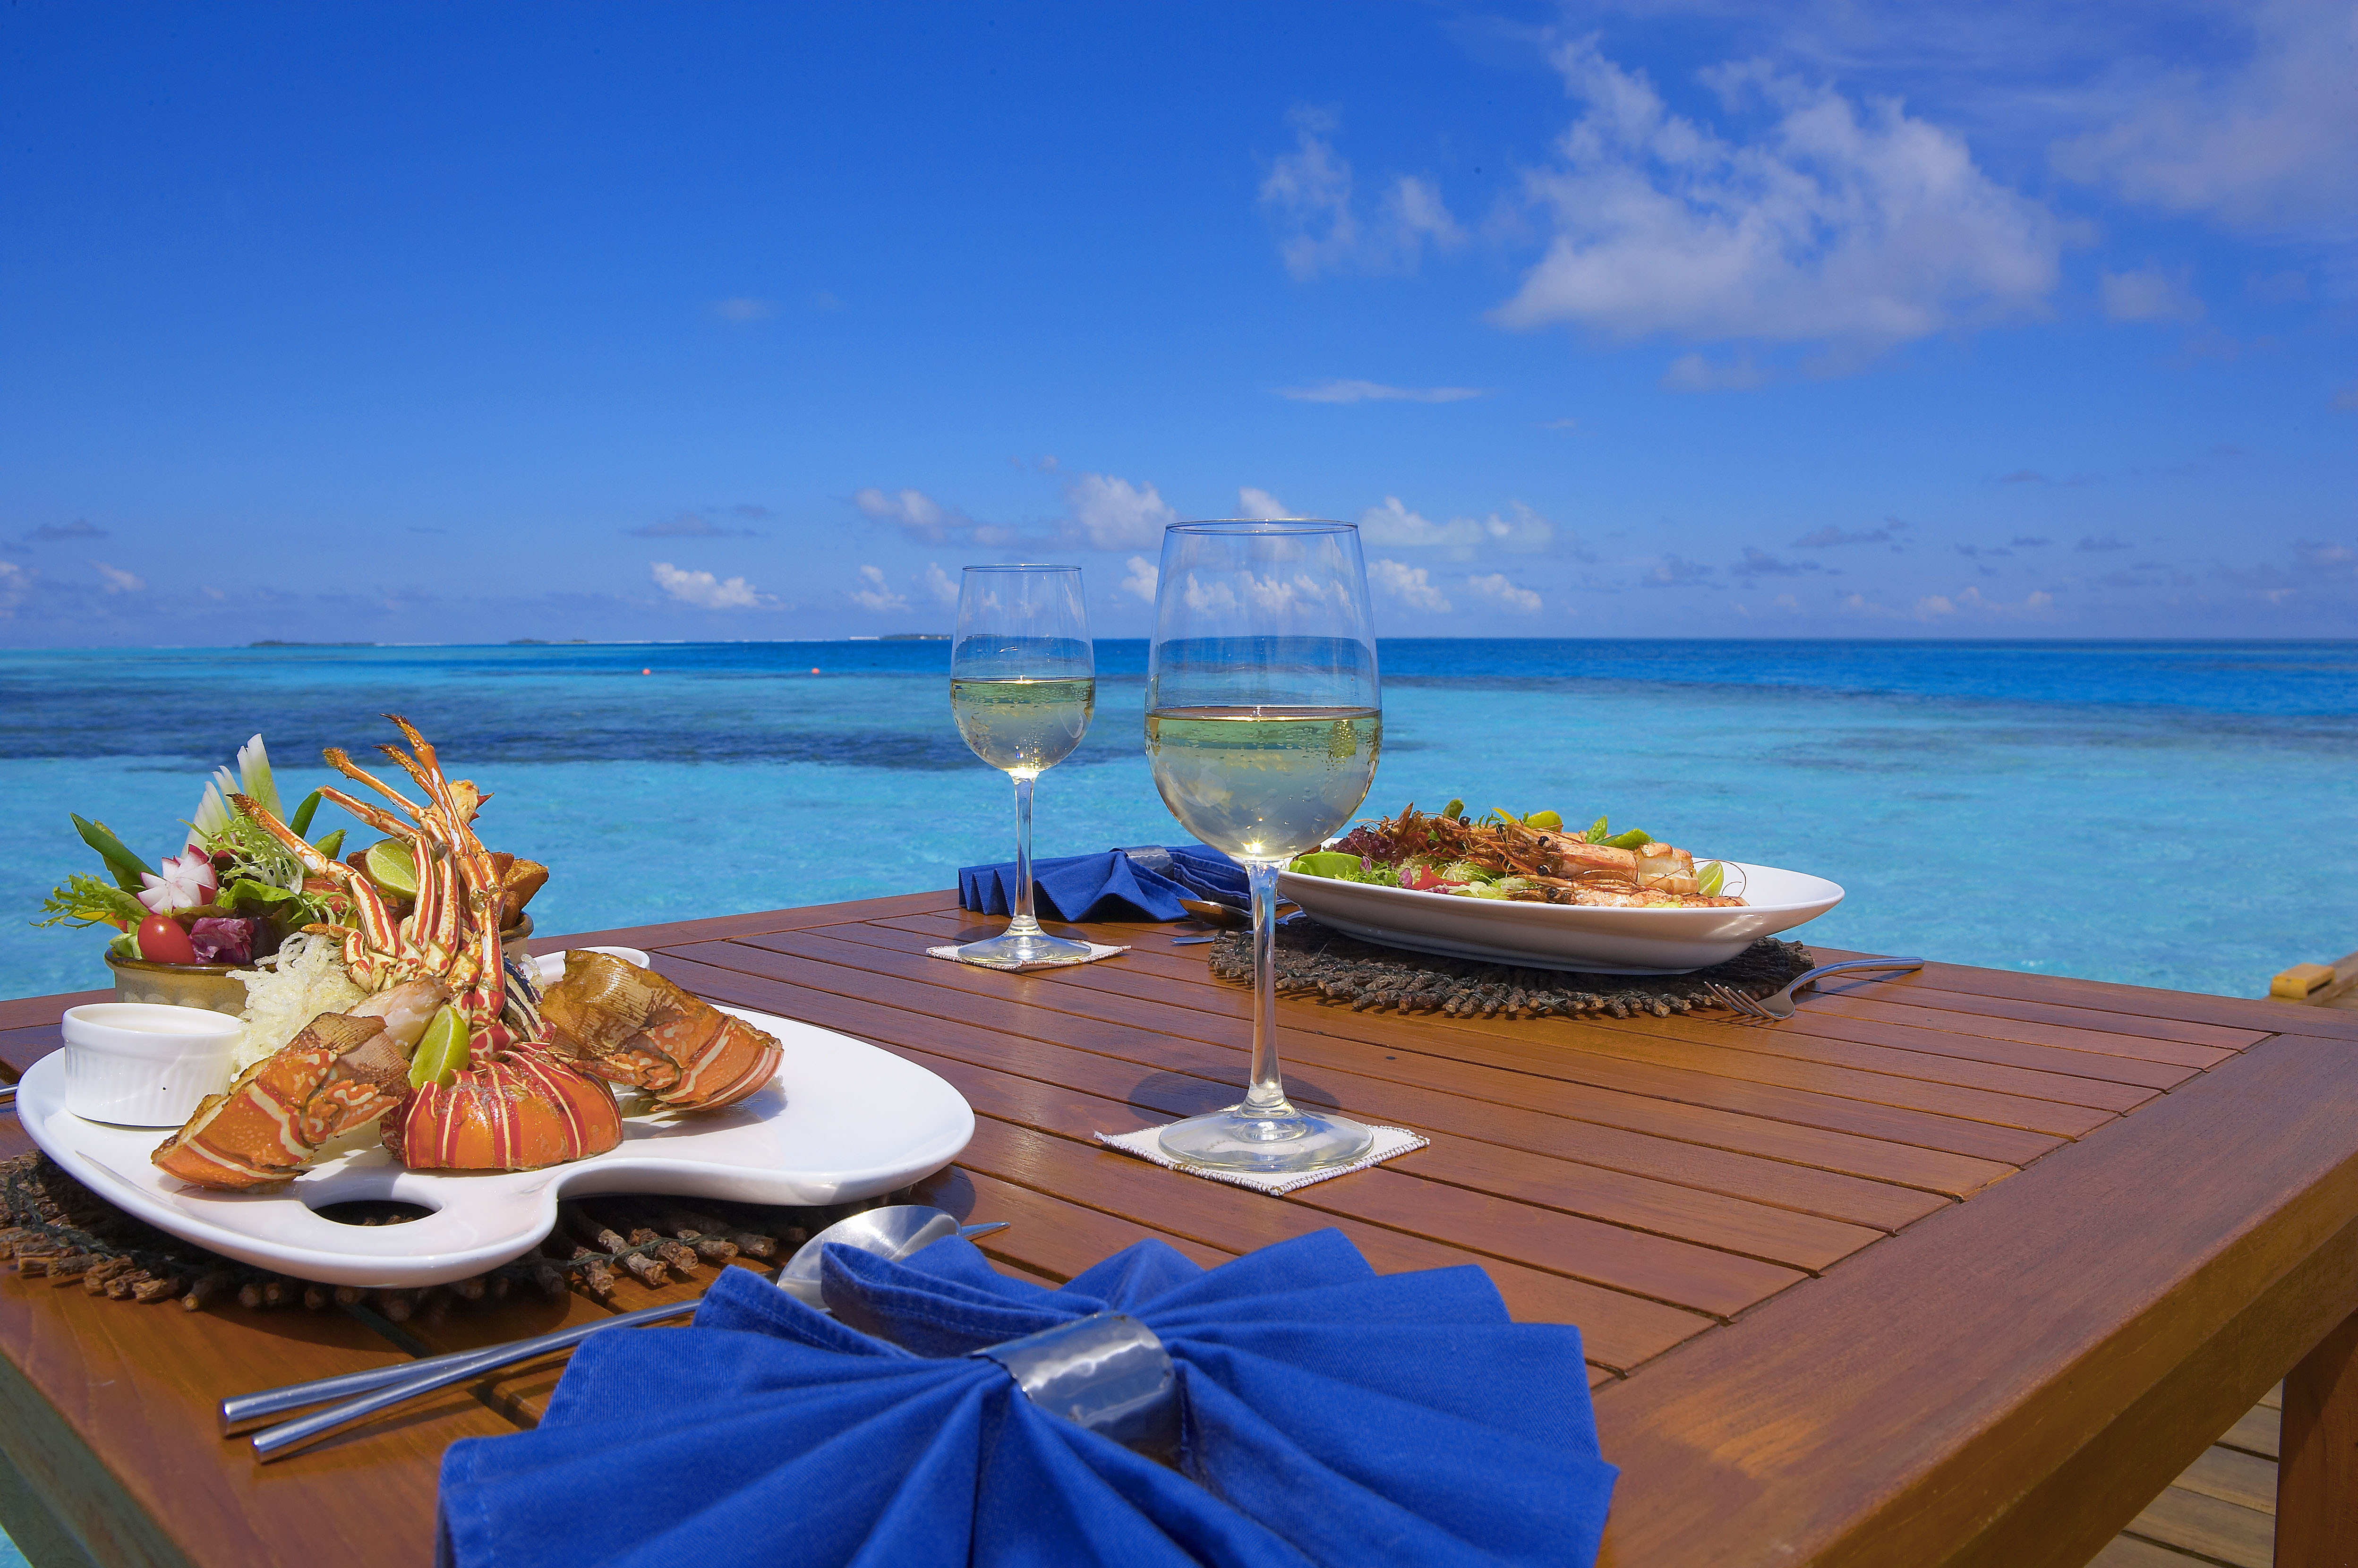 Ужин отдых. Ужин на берегу моря. Красивый вид на море. Шикарный вид на море. Завтрак с видом на море.